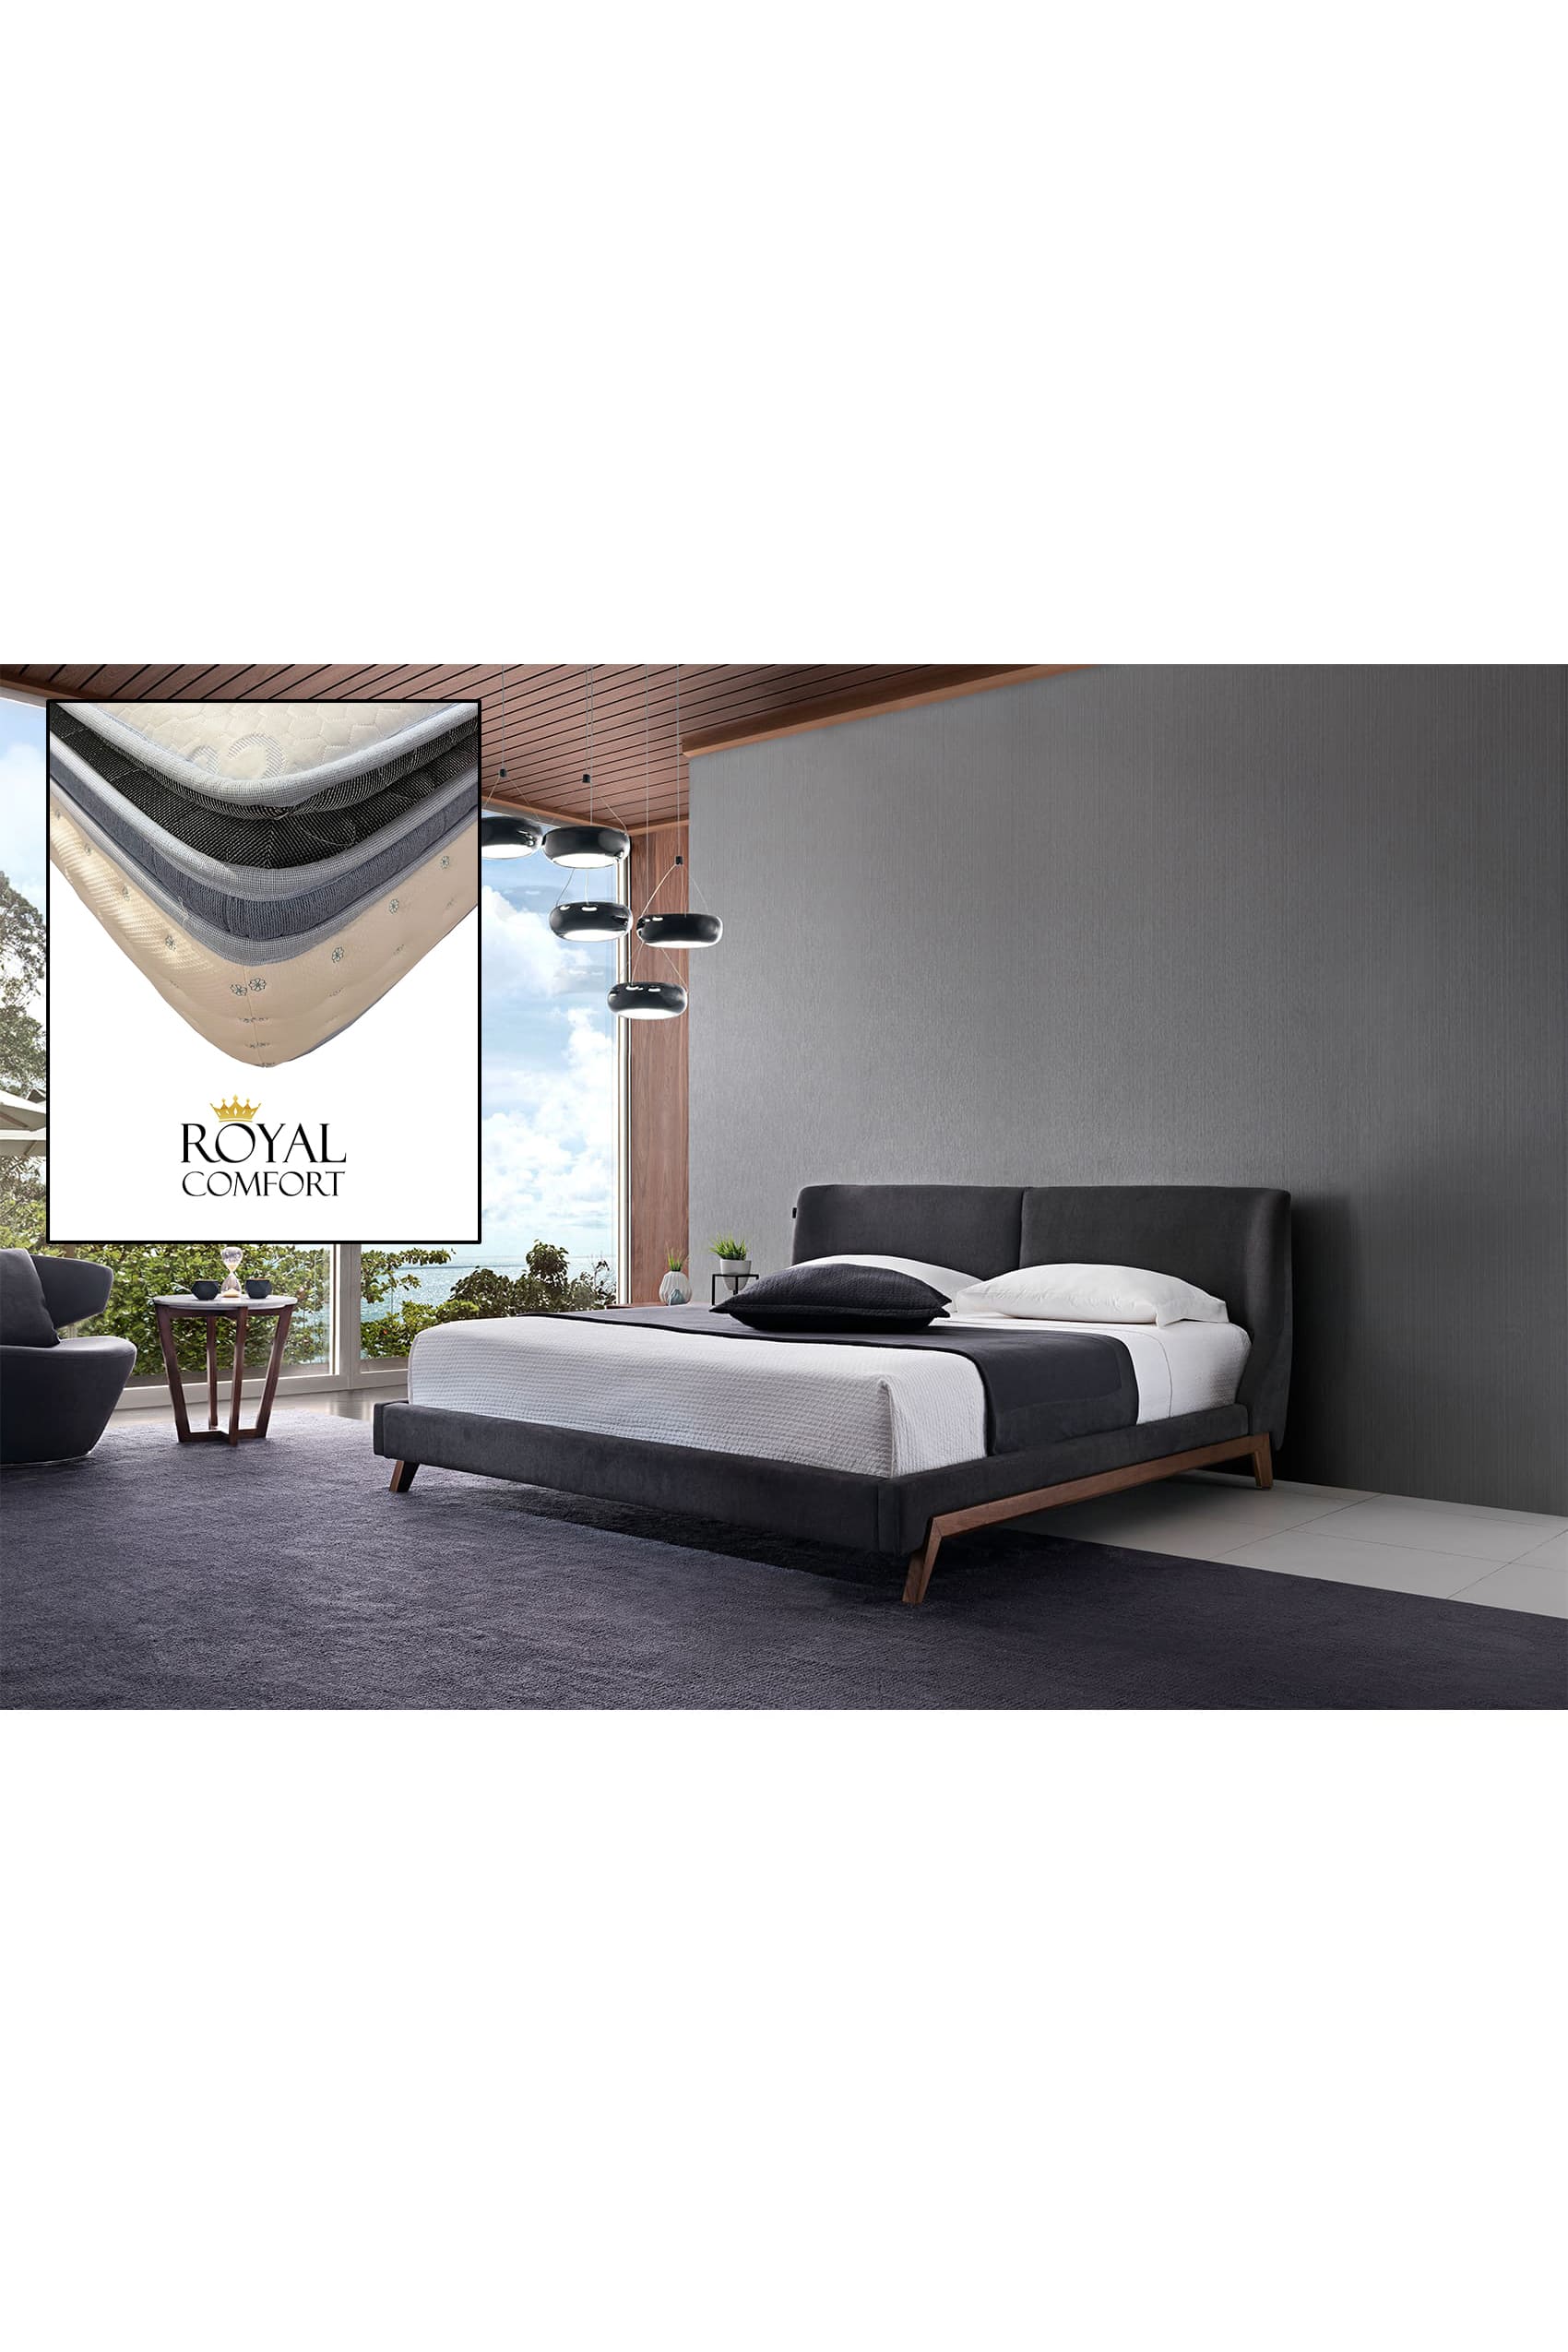 Sachi Designer Bed Frame + Royal Comfort Pillow Top Mattress